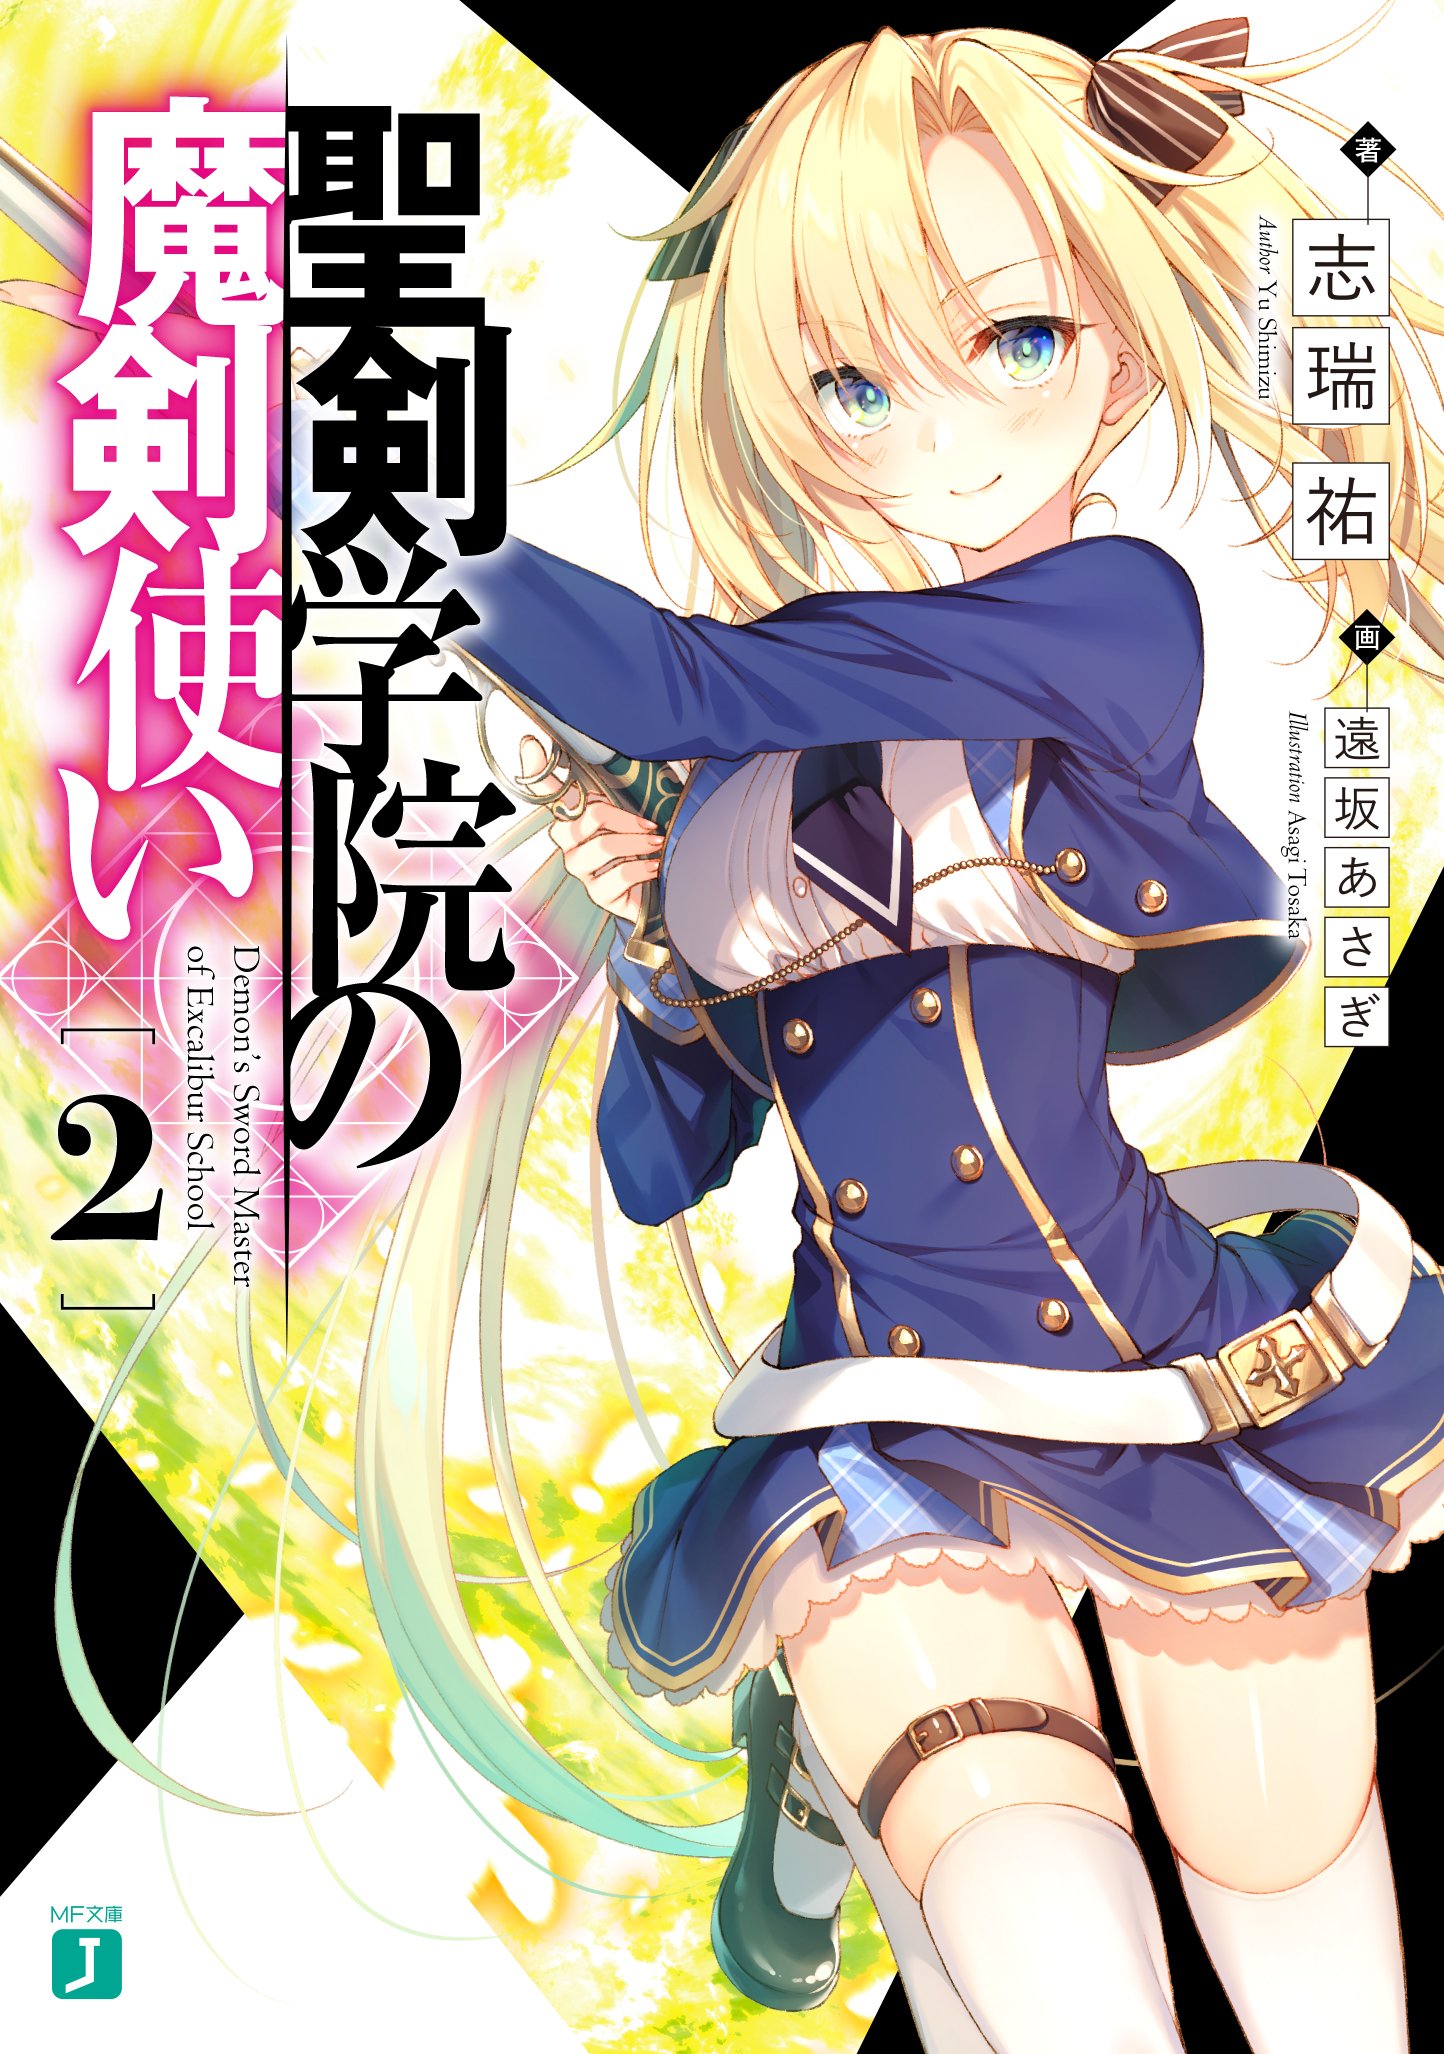 Light Novel Volume 2 | The Demon Sword Master of Excalibur Academy 